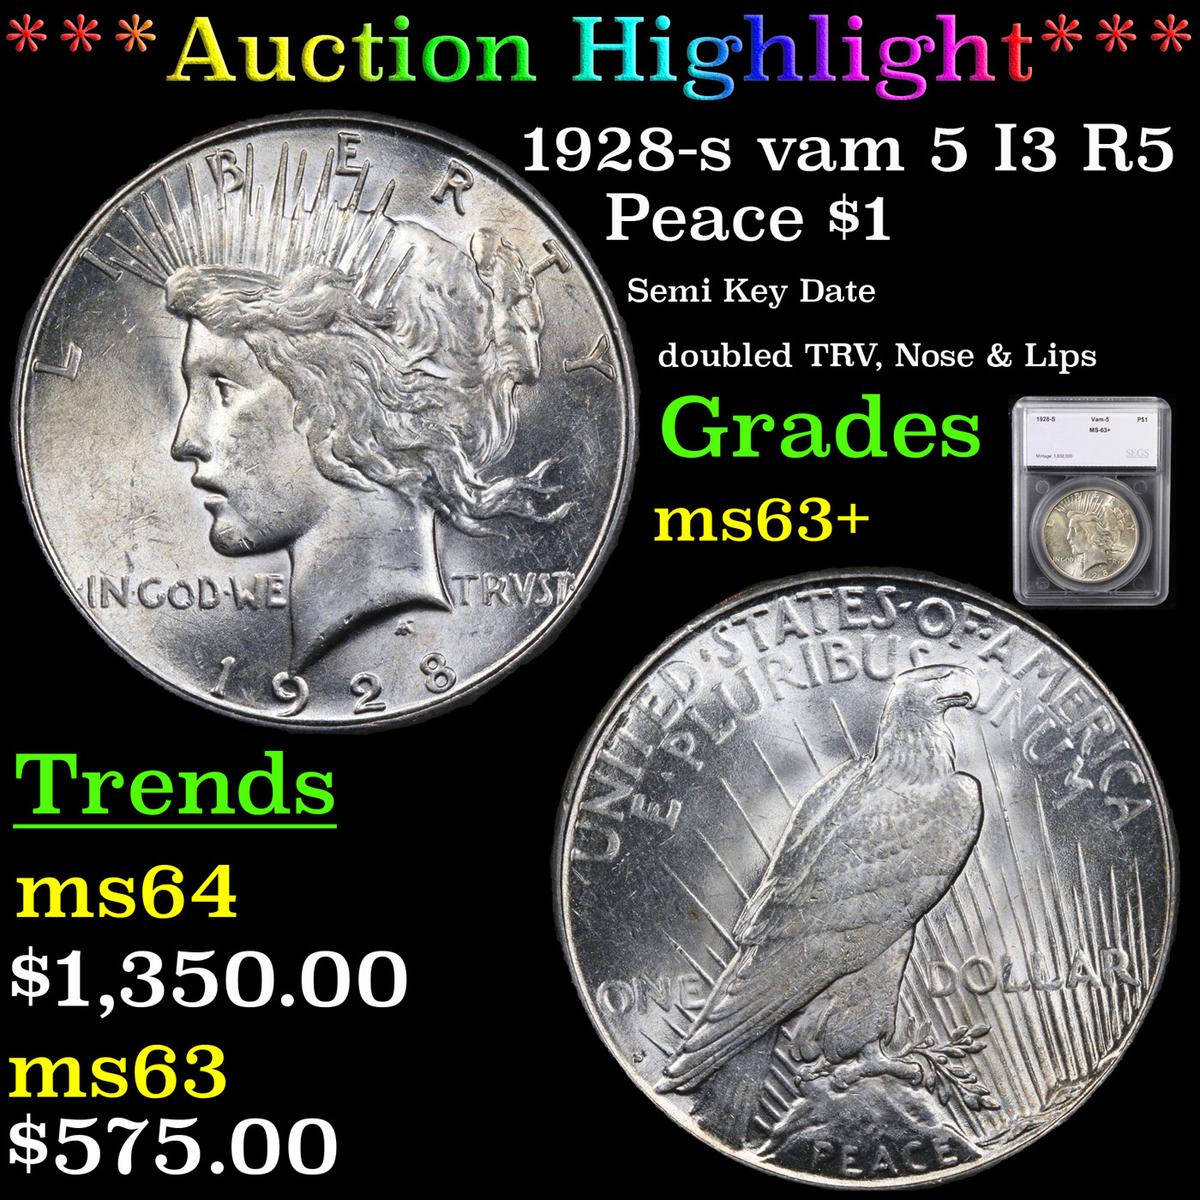 ***Auction Highlight*** 1928-s vam 5 I3 R5 Peace Dollar $1 Graded ms63+ By SEGS (fc)